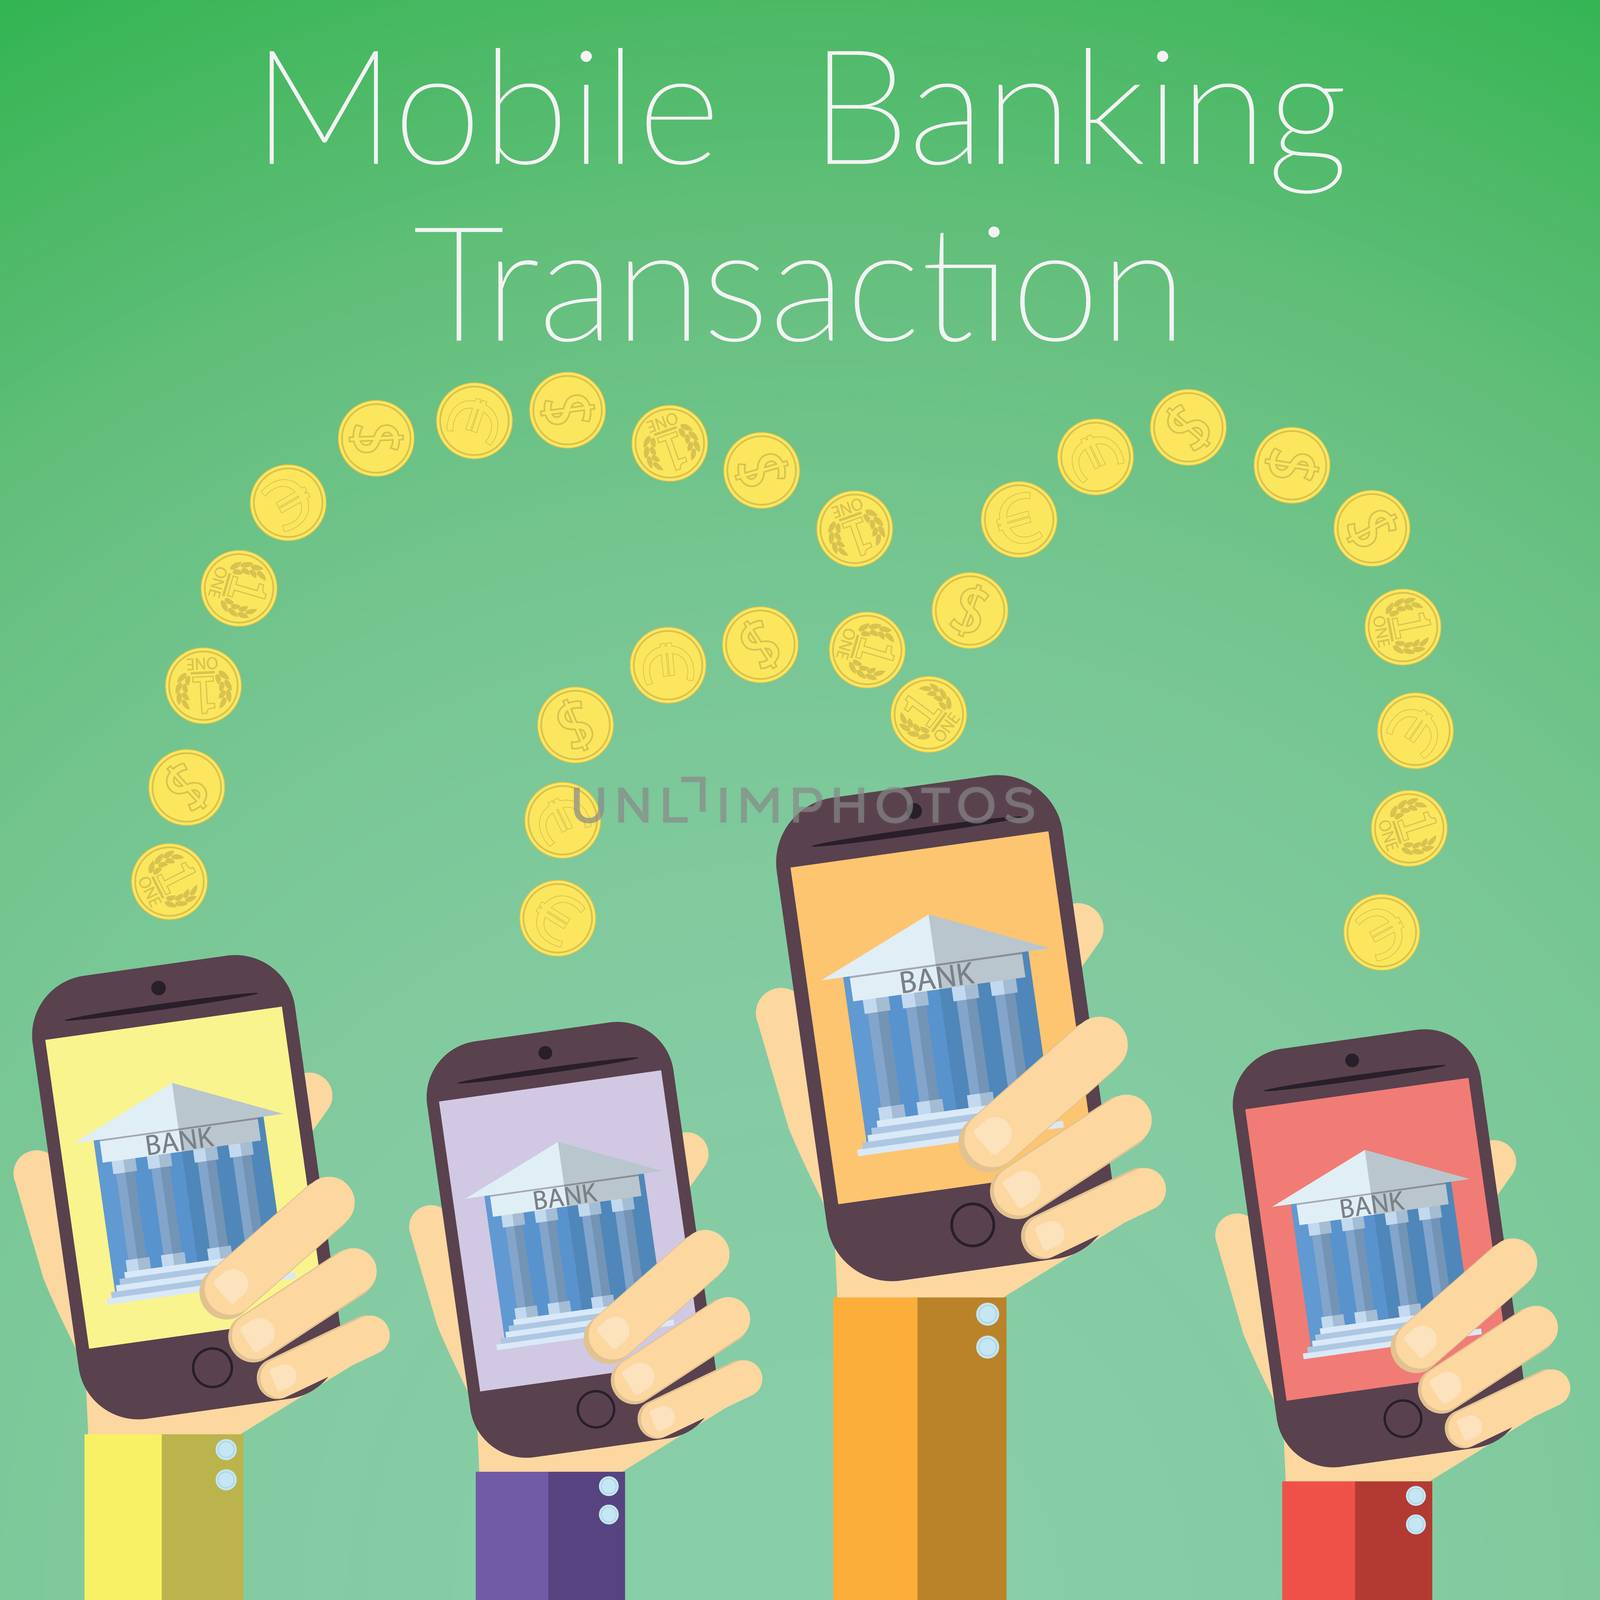 Flat design vector illustration of hands holding smart phones with bank icon. Concept for online banking transaction, on color background by Lemon_workshop